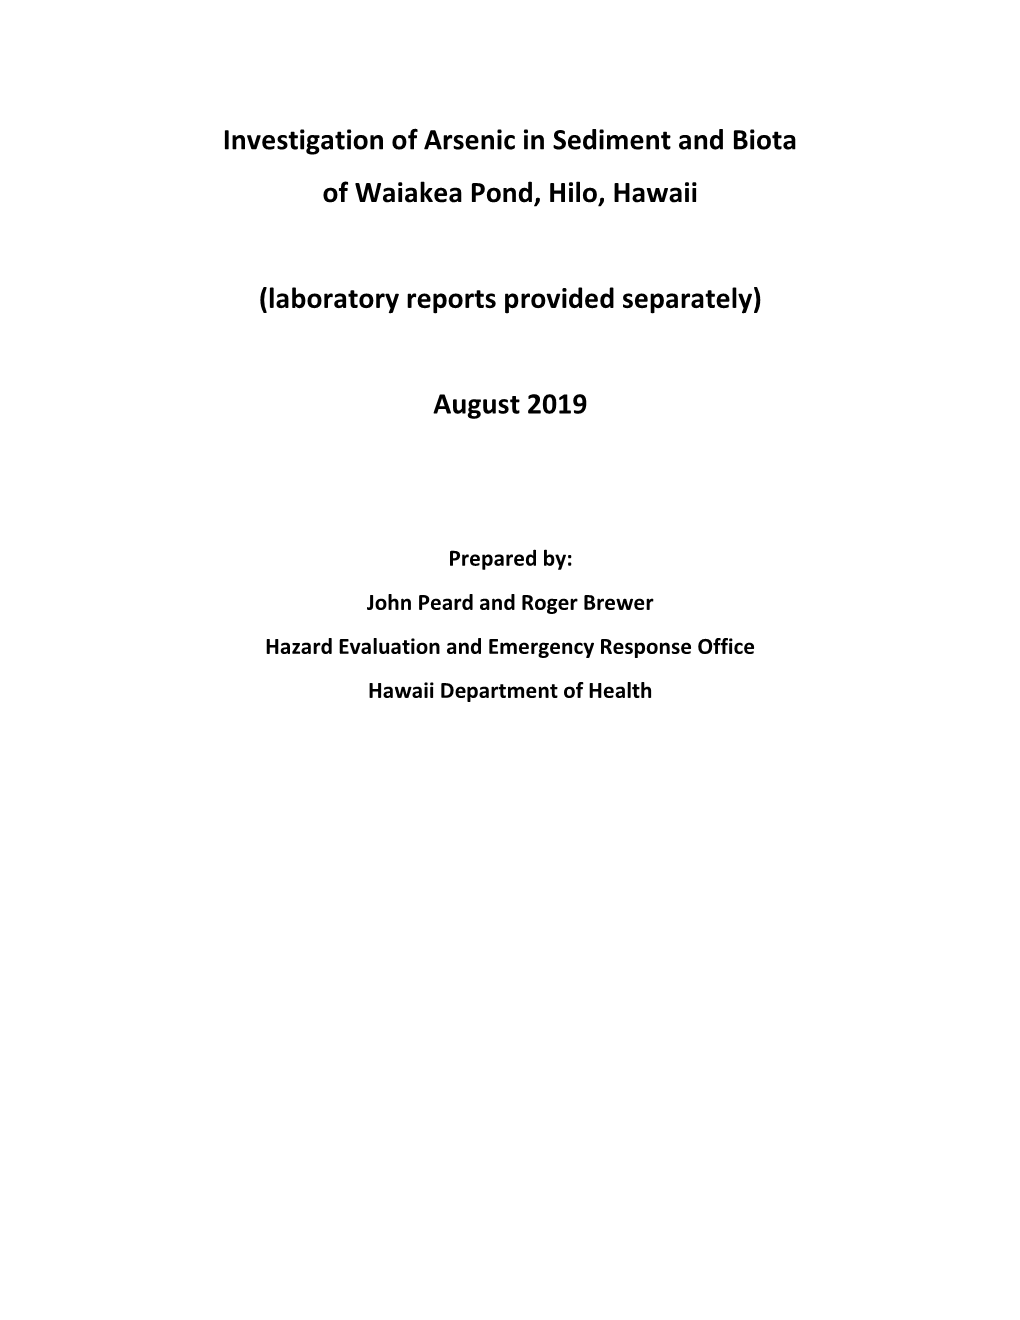 Investigation of Arsenic in Sediment and Biota of Waiakea Pond, Hilo, Hawaii